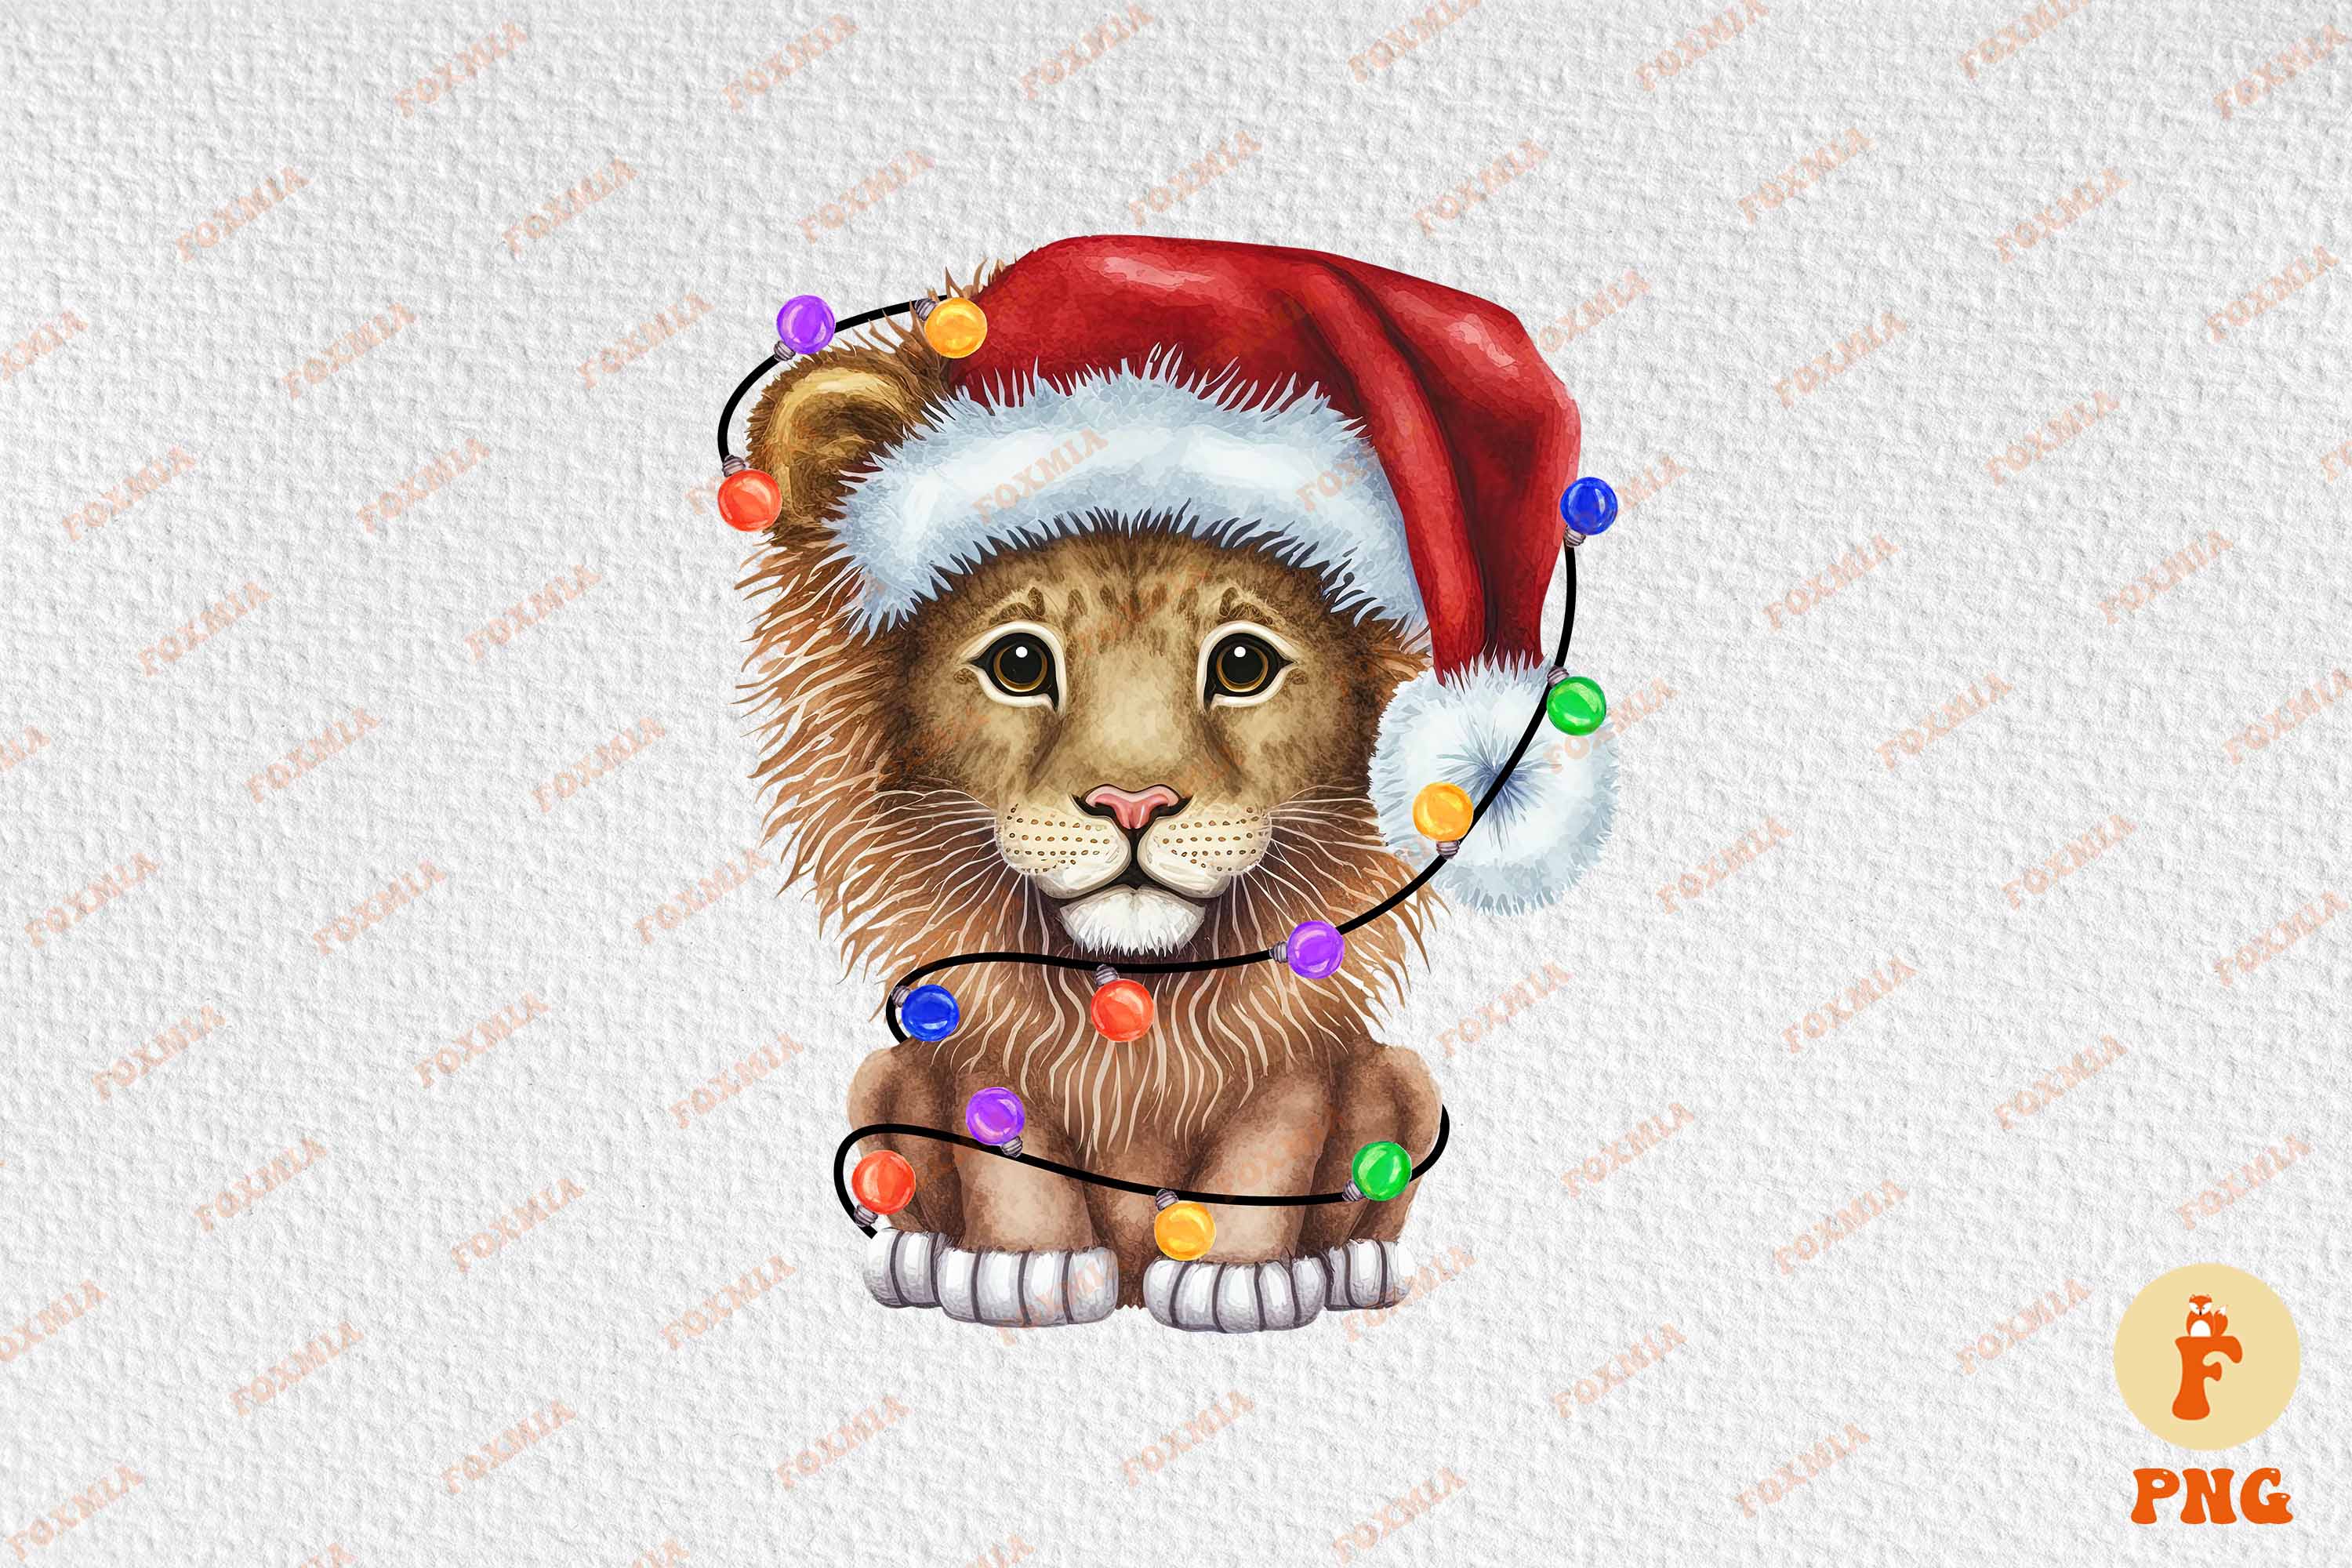 Gorgeous image of a lion wearing a santa hat.